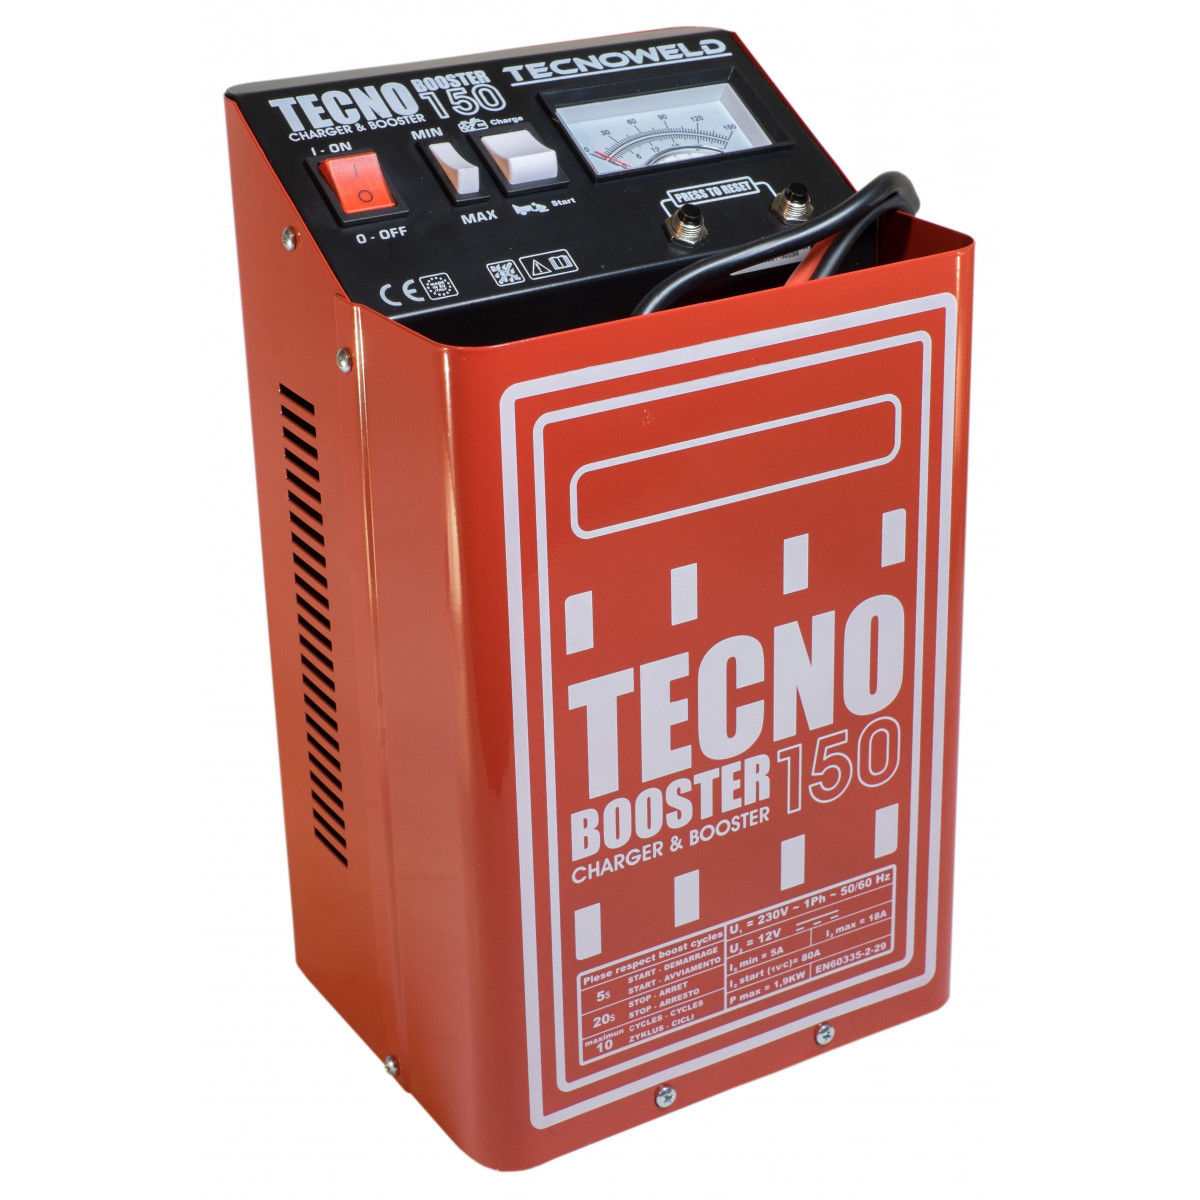 Chargeur Demarreur Tecnobooster Batterie 25/ 250a -10/270ah Compact 1900w